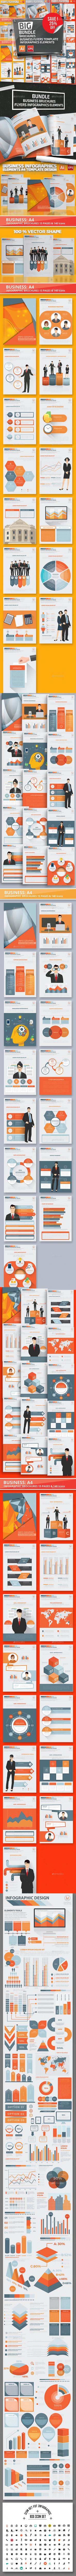 Bundle Business Infographic Templates